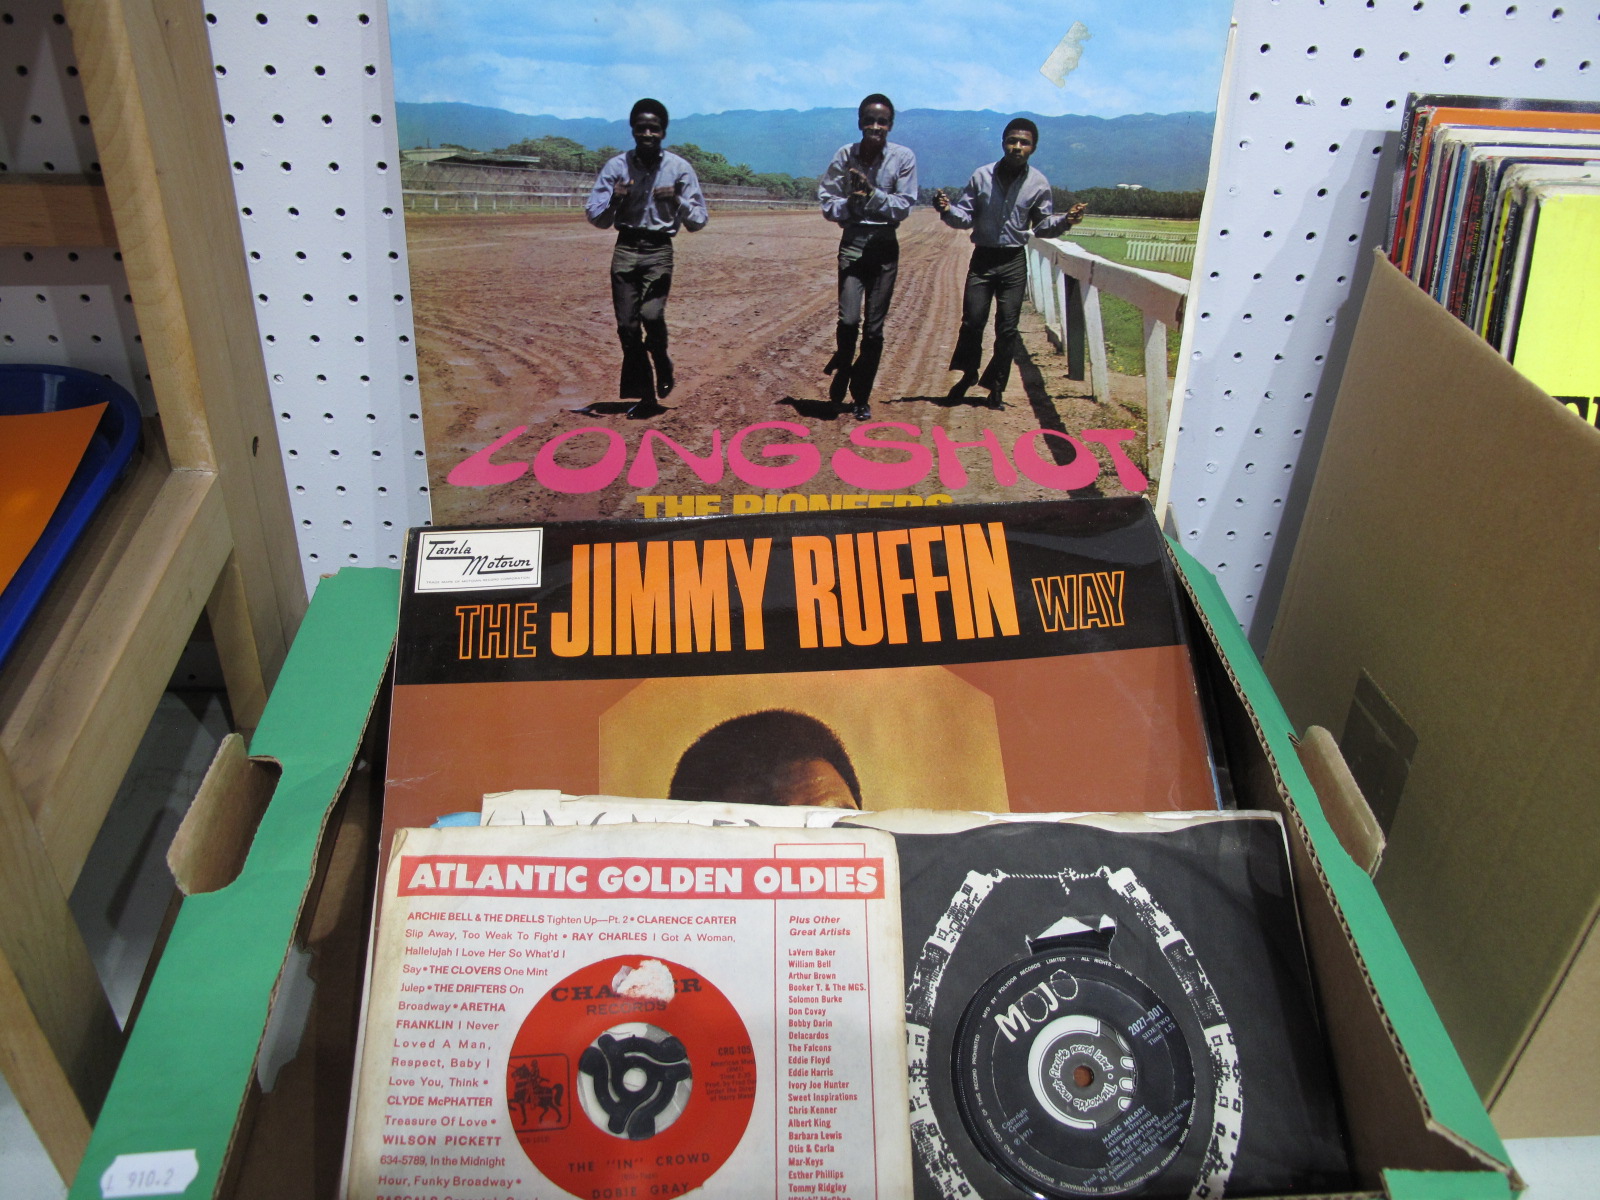 Pioneers 'Long Shot' LP (Trojan TBL103A); 'The Jimmy Ruffin Way' LP (Tamla), Dobie Gray 'The In'